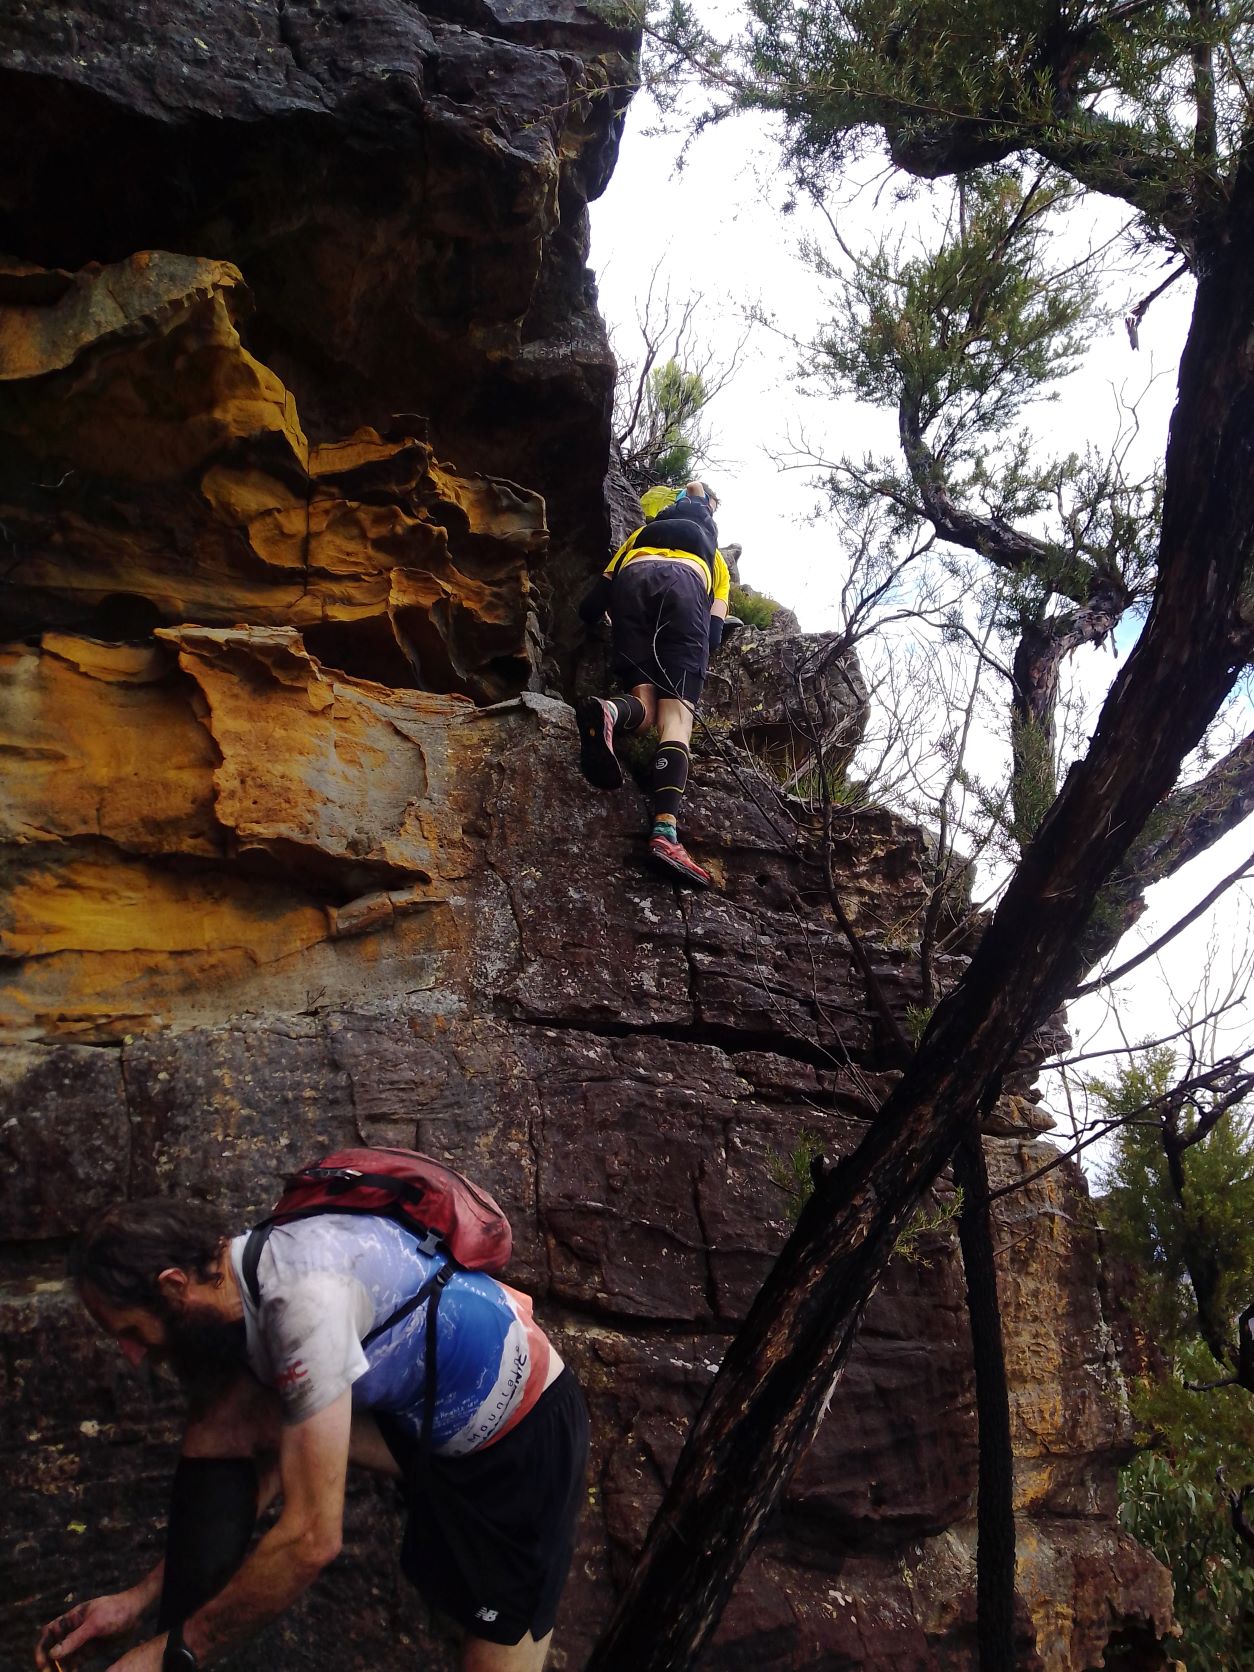 Easy climb up Spring Creek Ridge